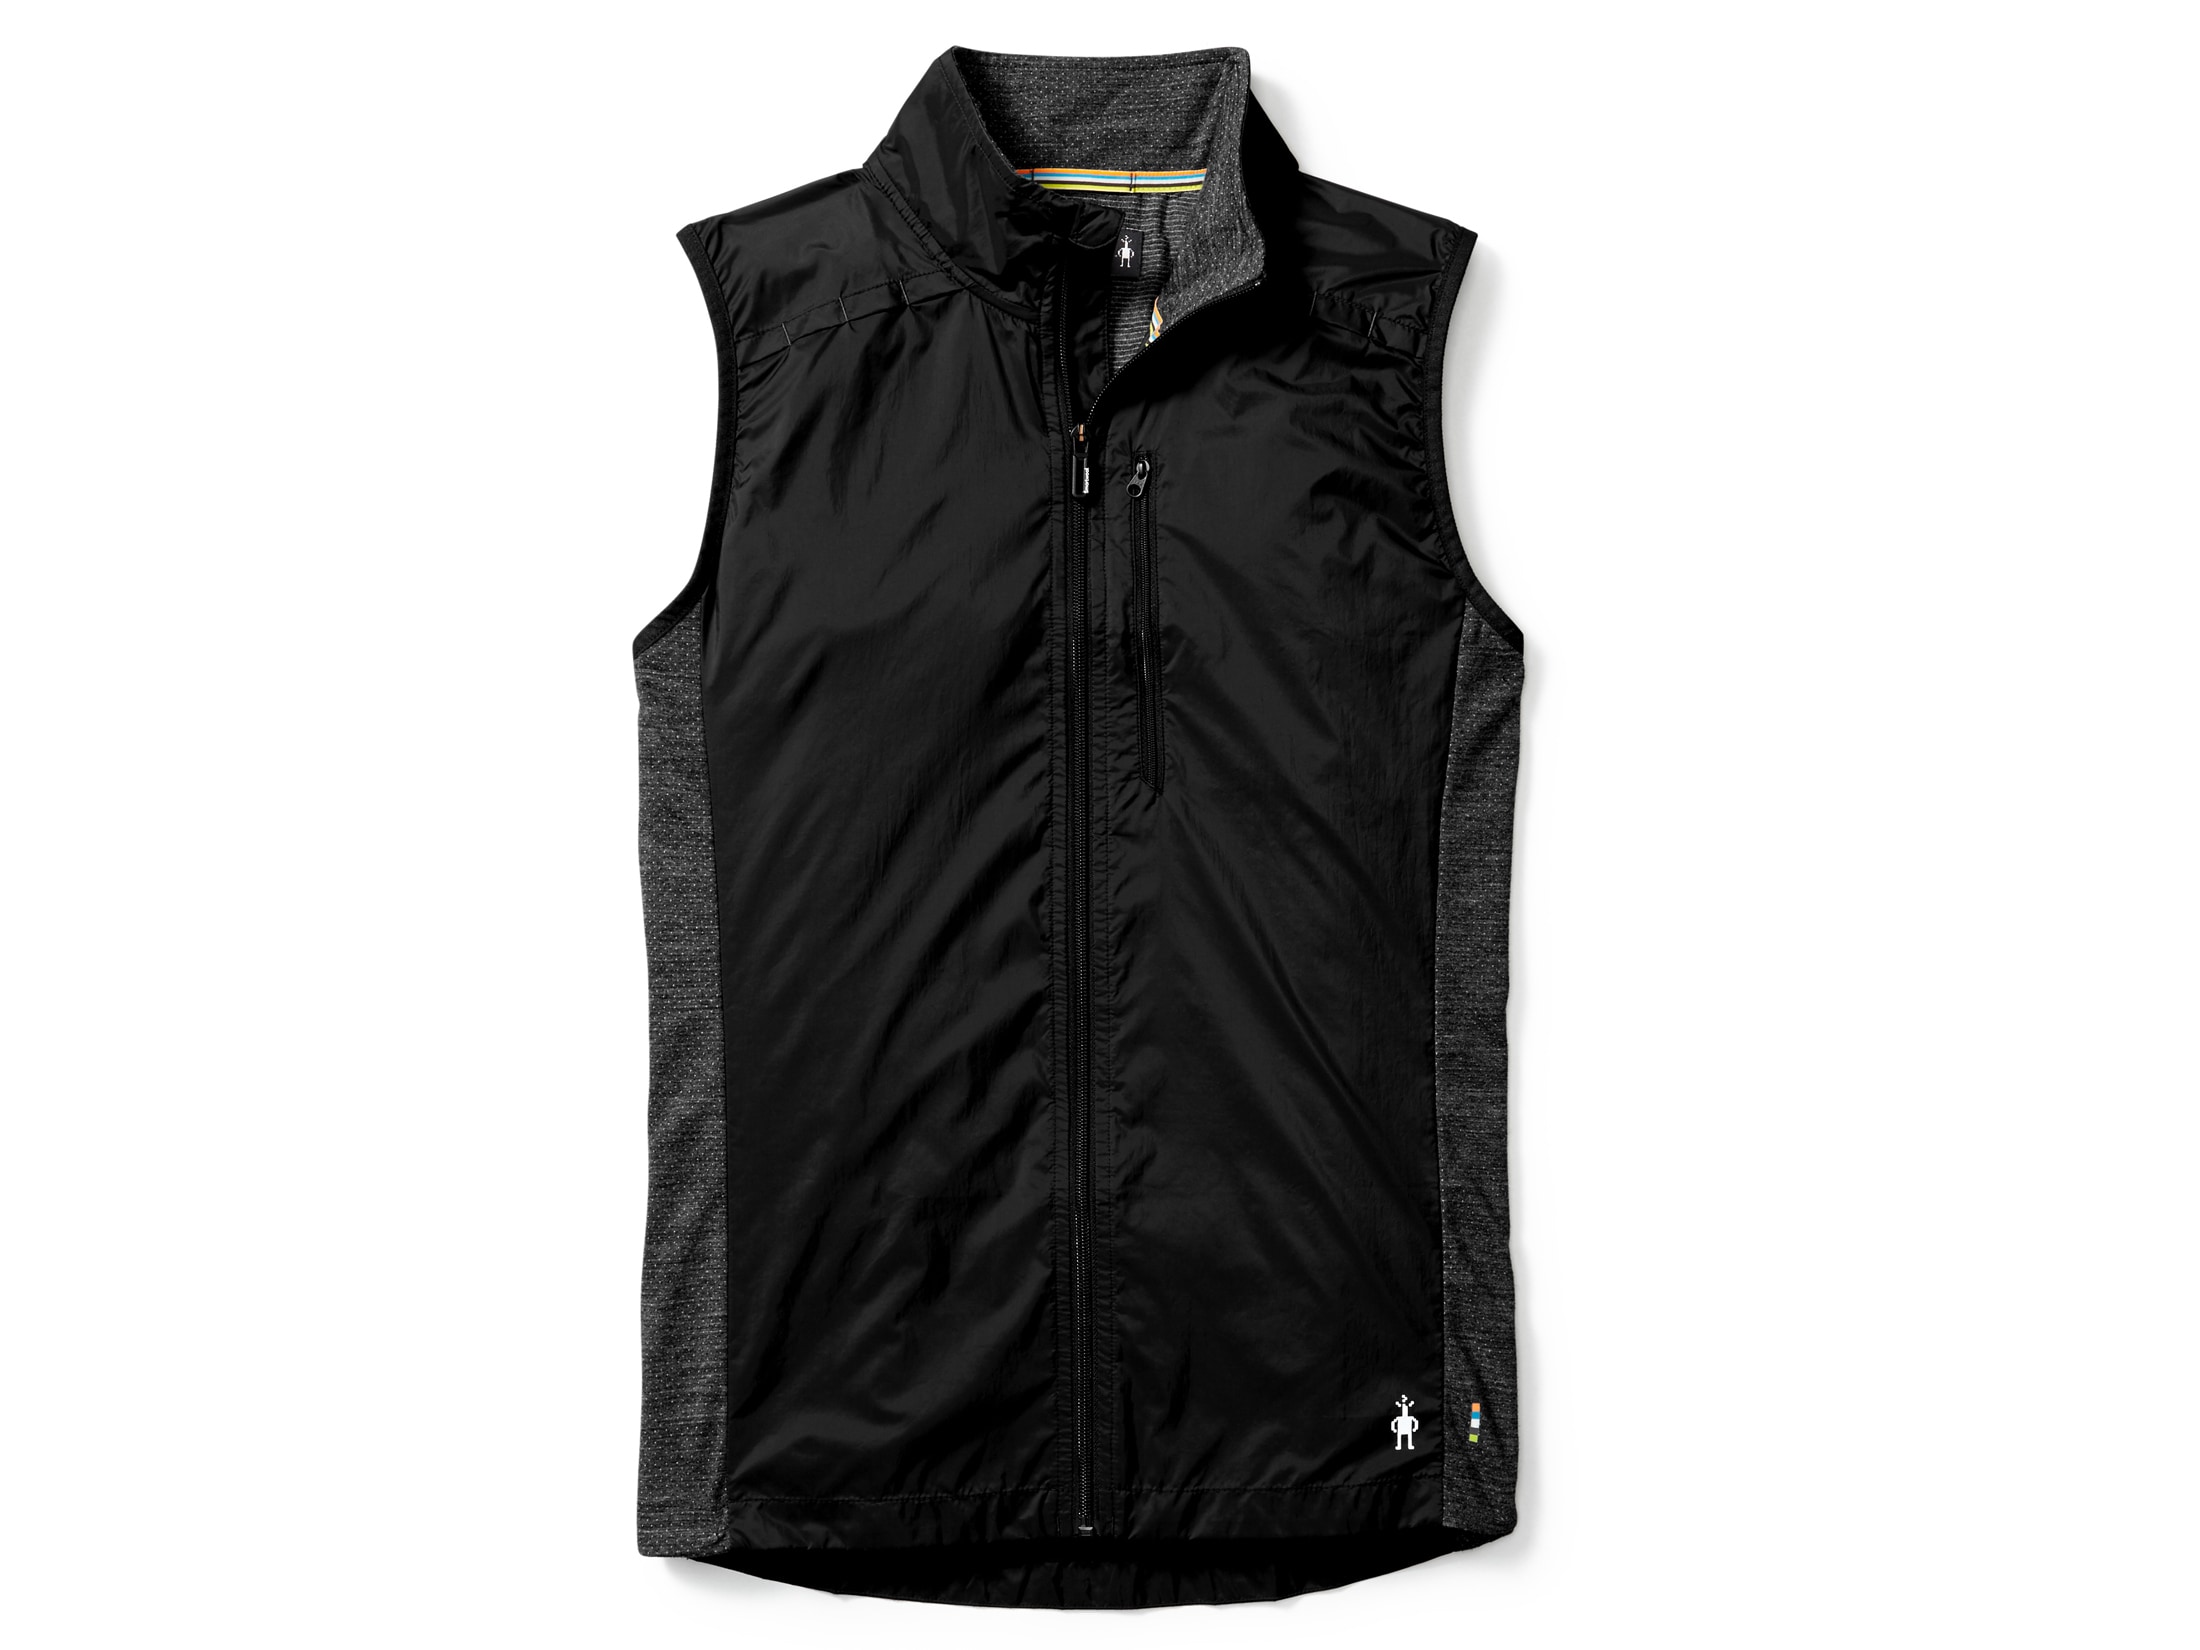 Smartwool Men's PhD Ultra Light Sport Vest Nylon/Merino Wool Black